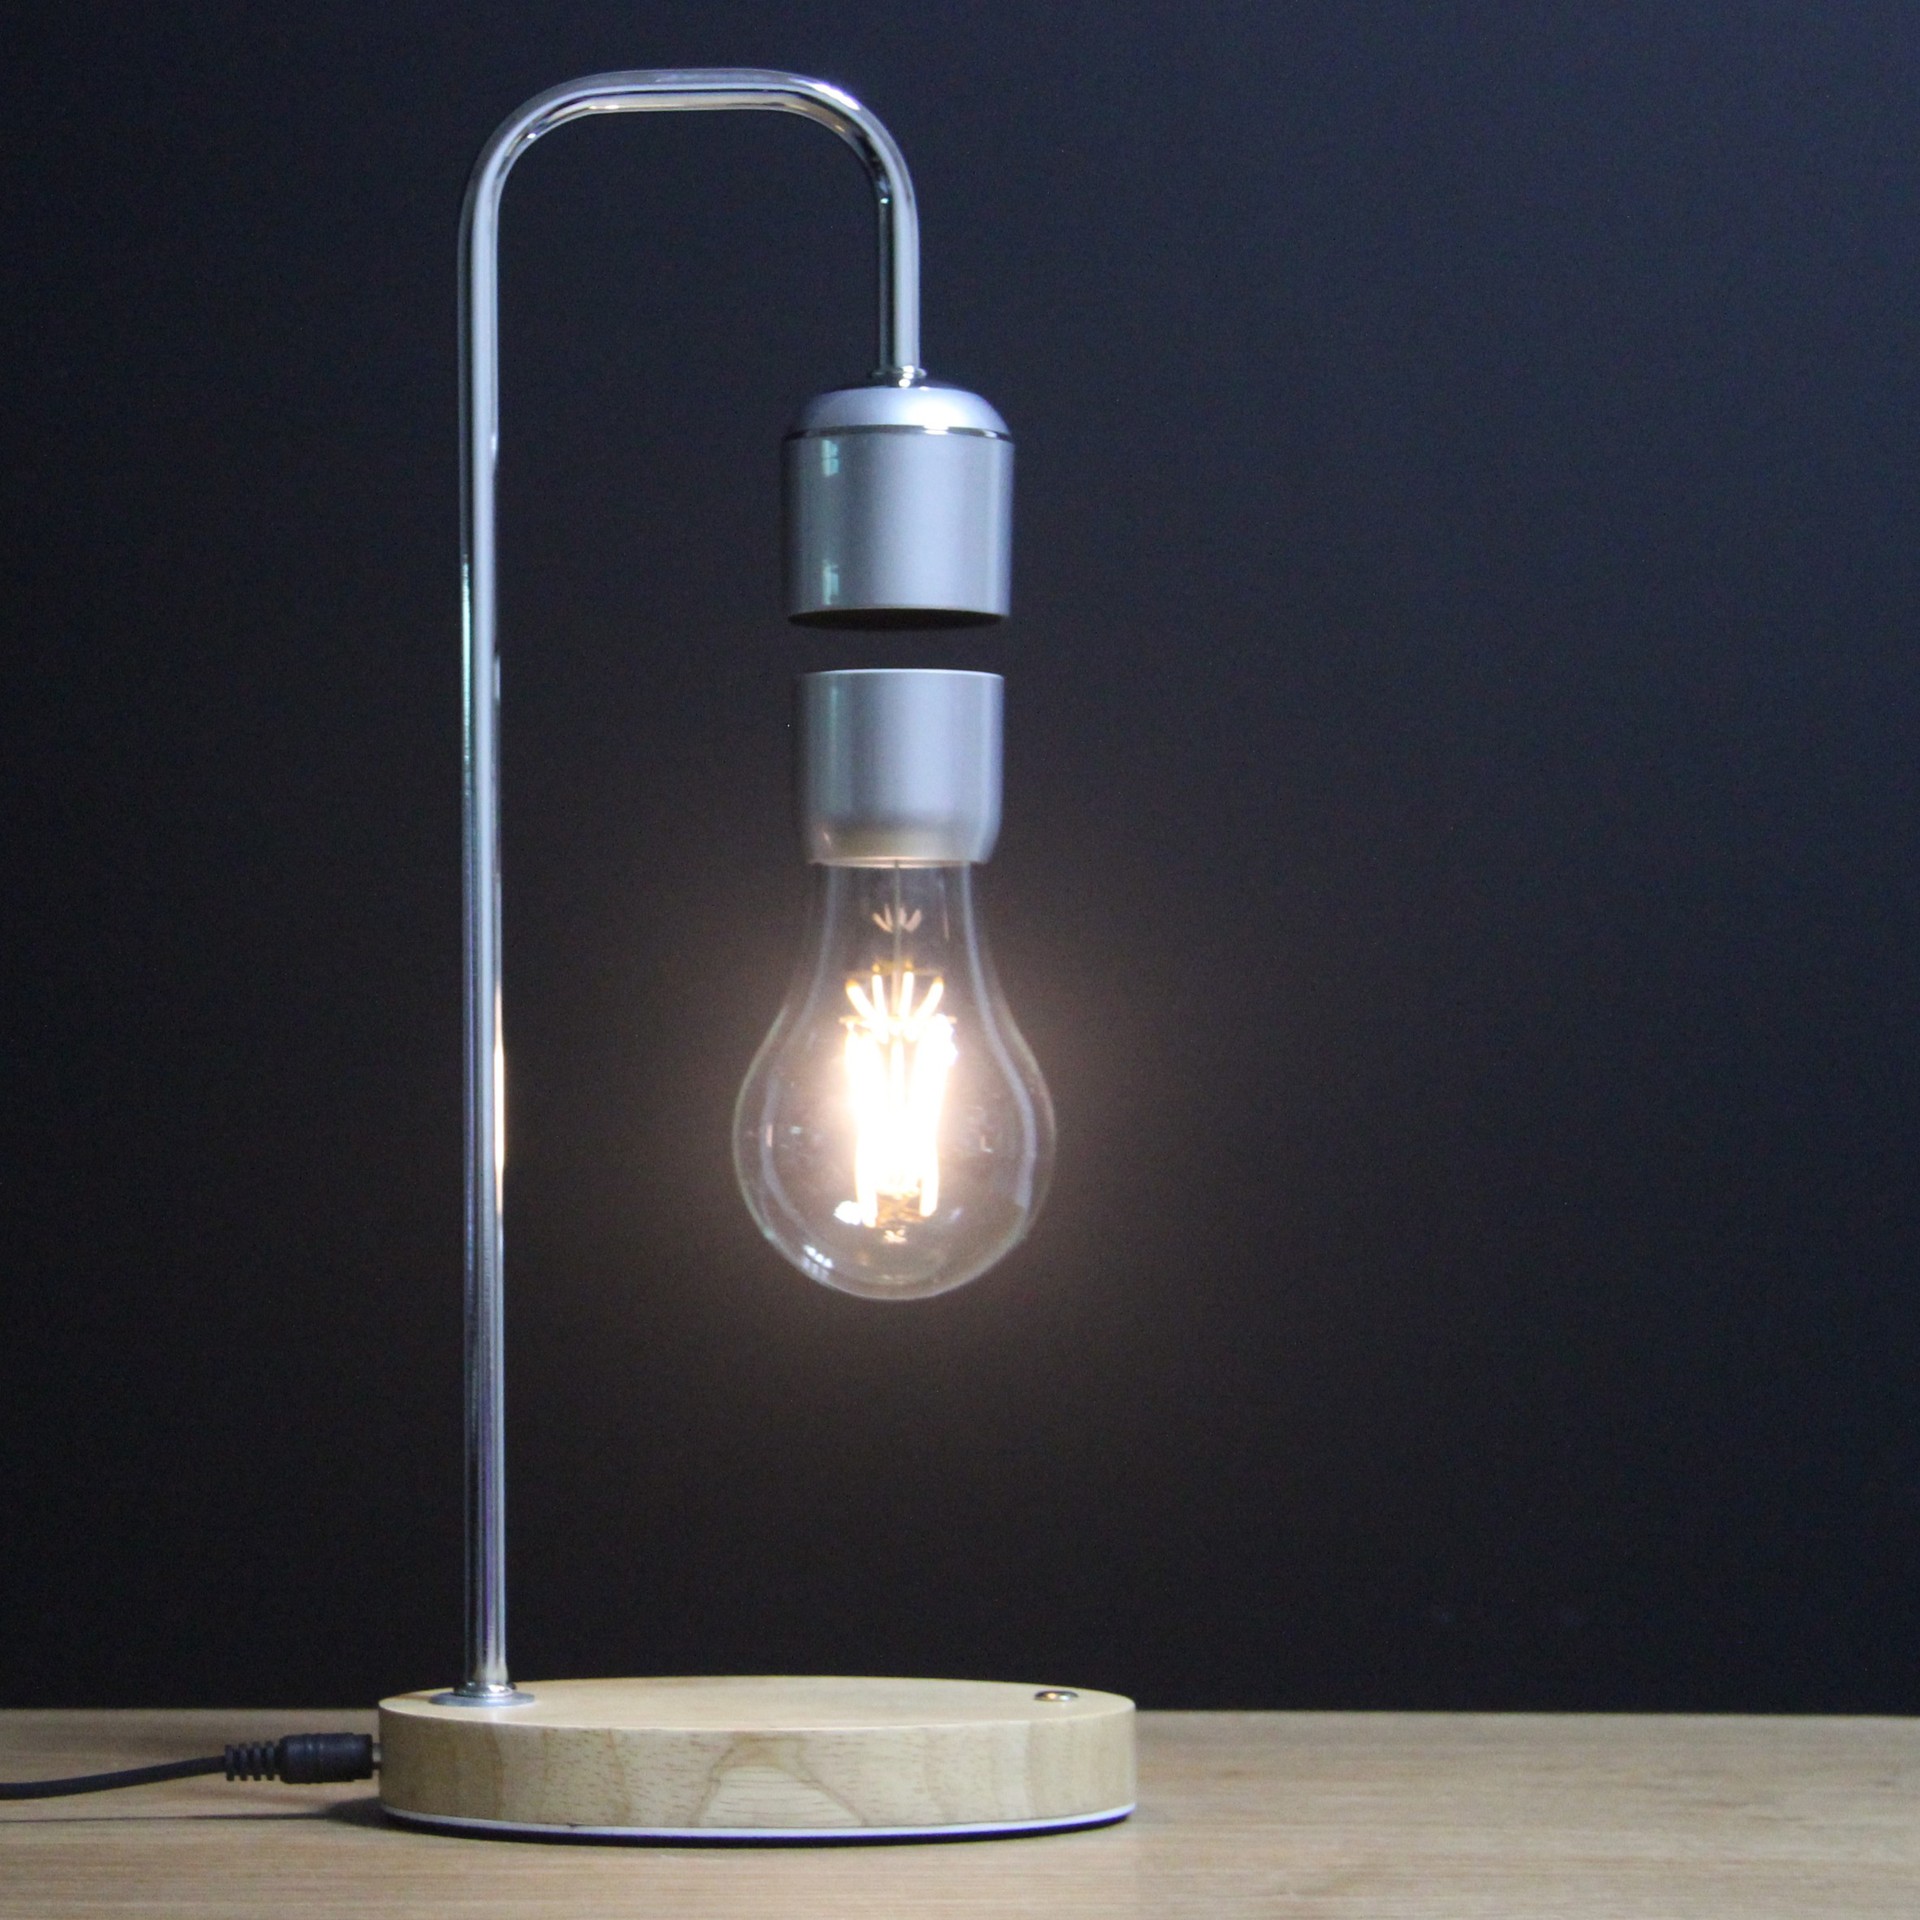 Magnetic-Levitation-LED-Light-Bulb-Wireless-Charging-LED-Night-Light-Desk-Lamps-Bulb-For-Home-Decora-1926813-4